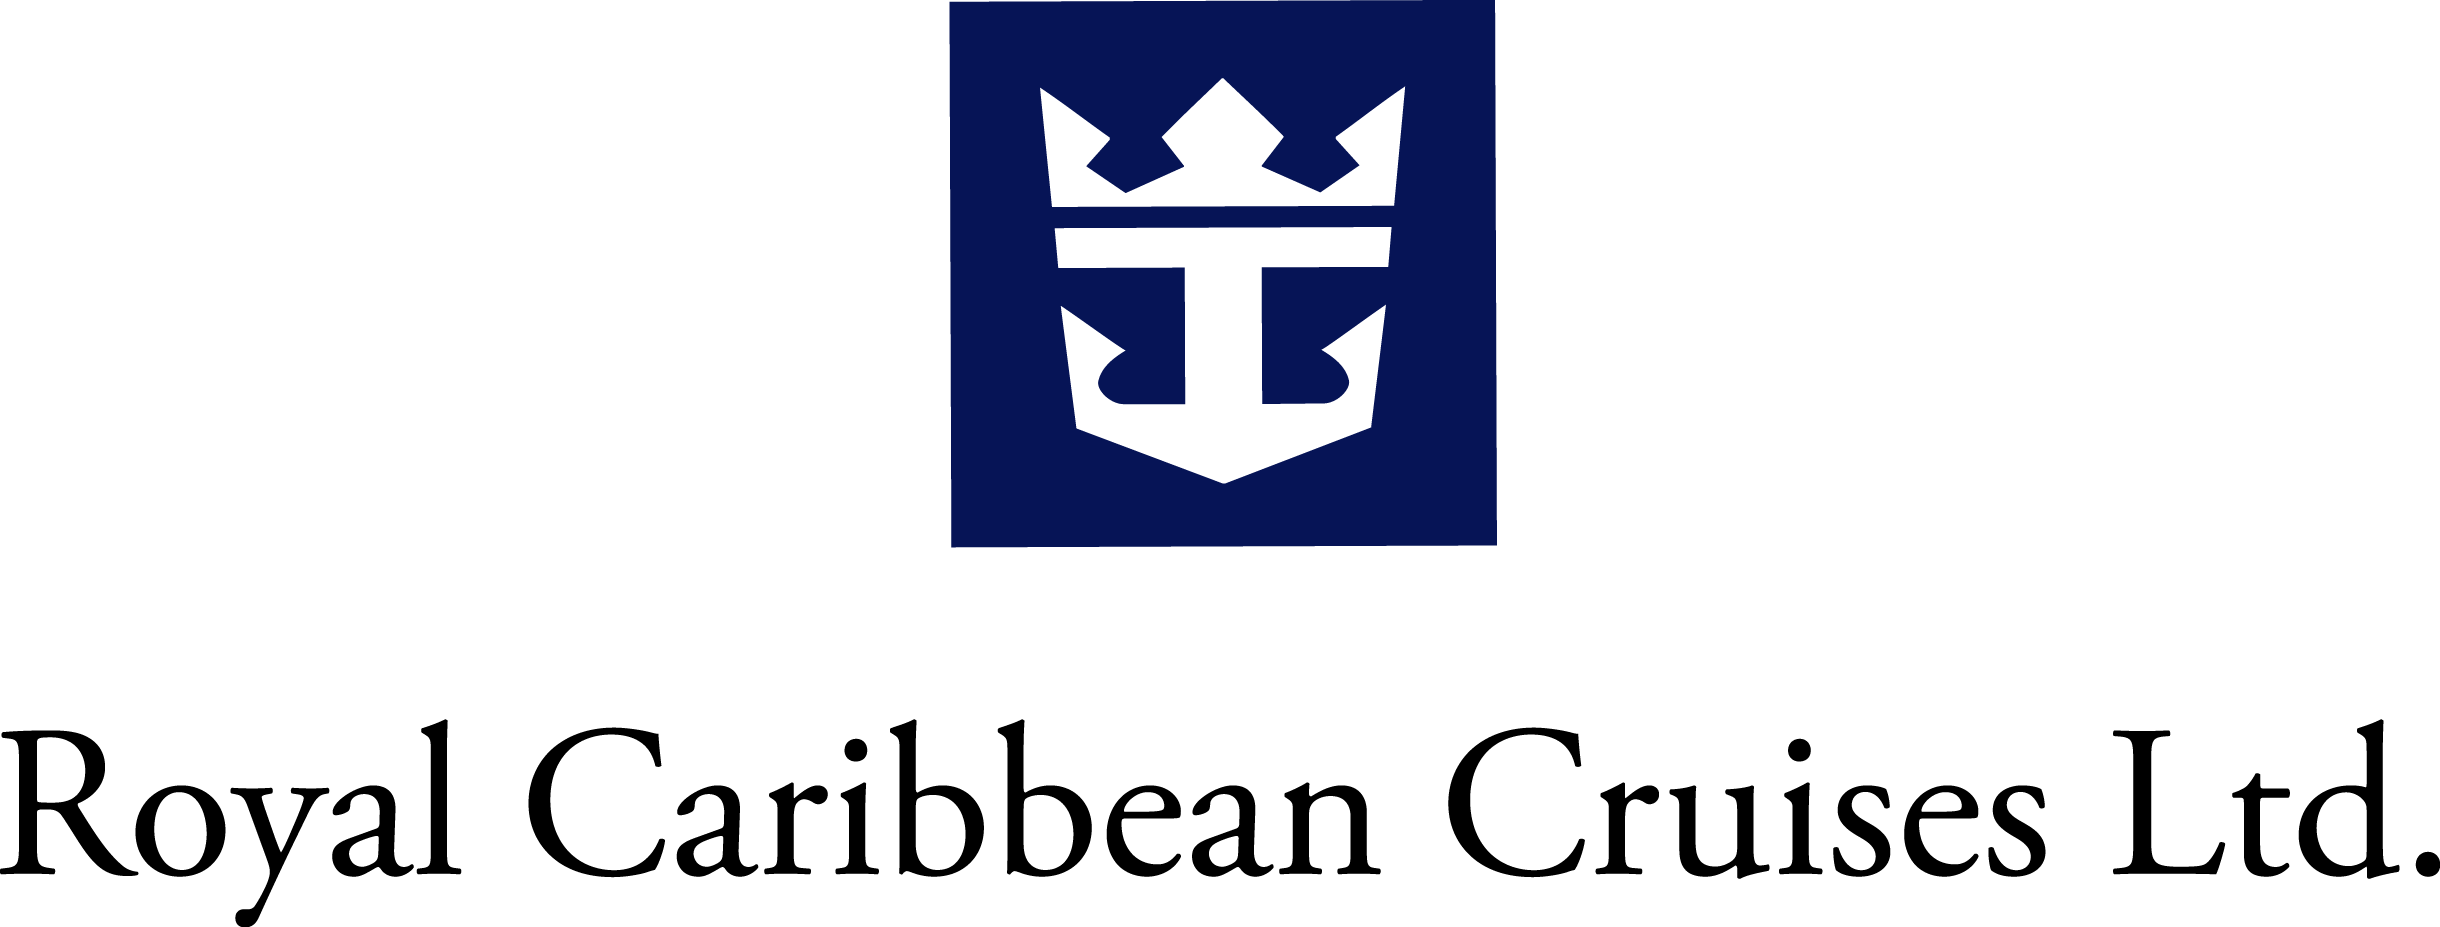 royal caribbean cruise ticker symbol